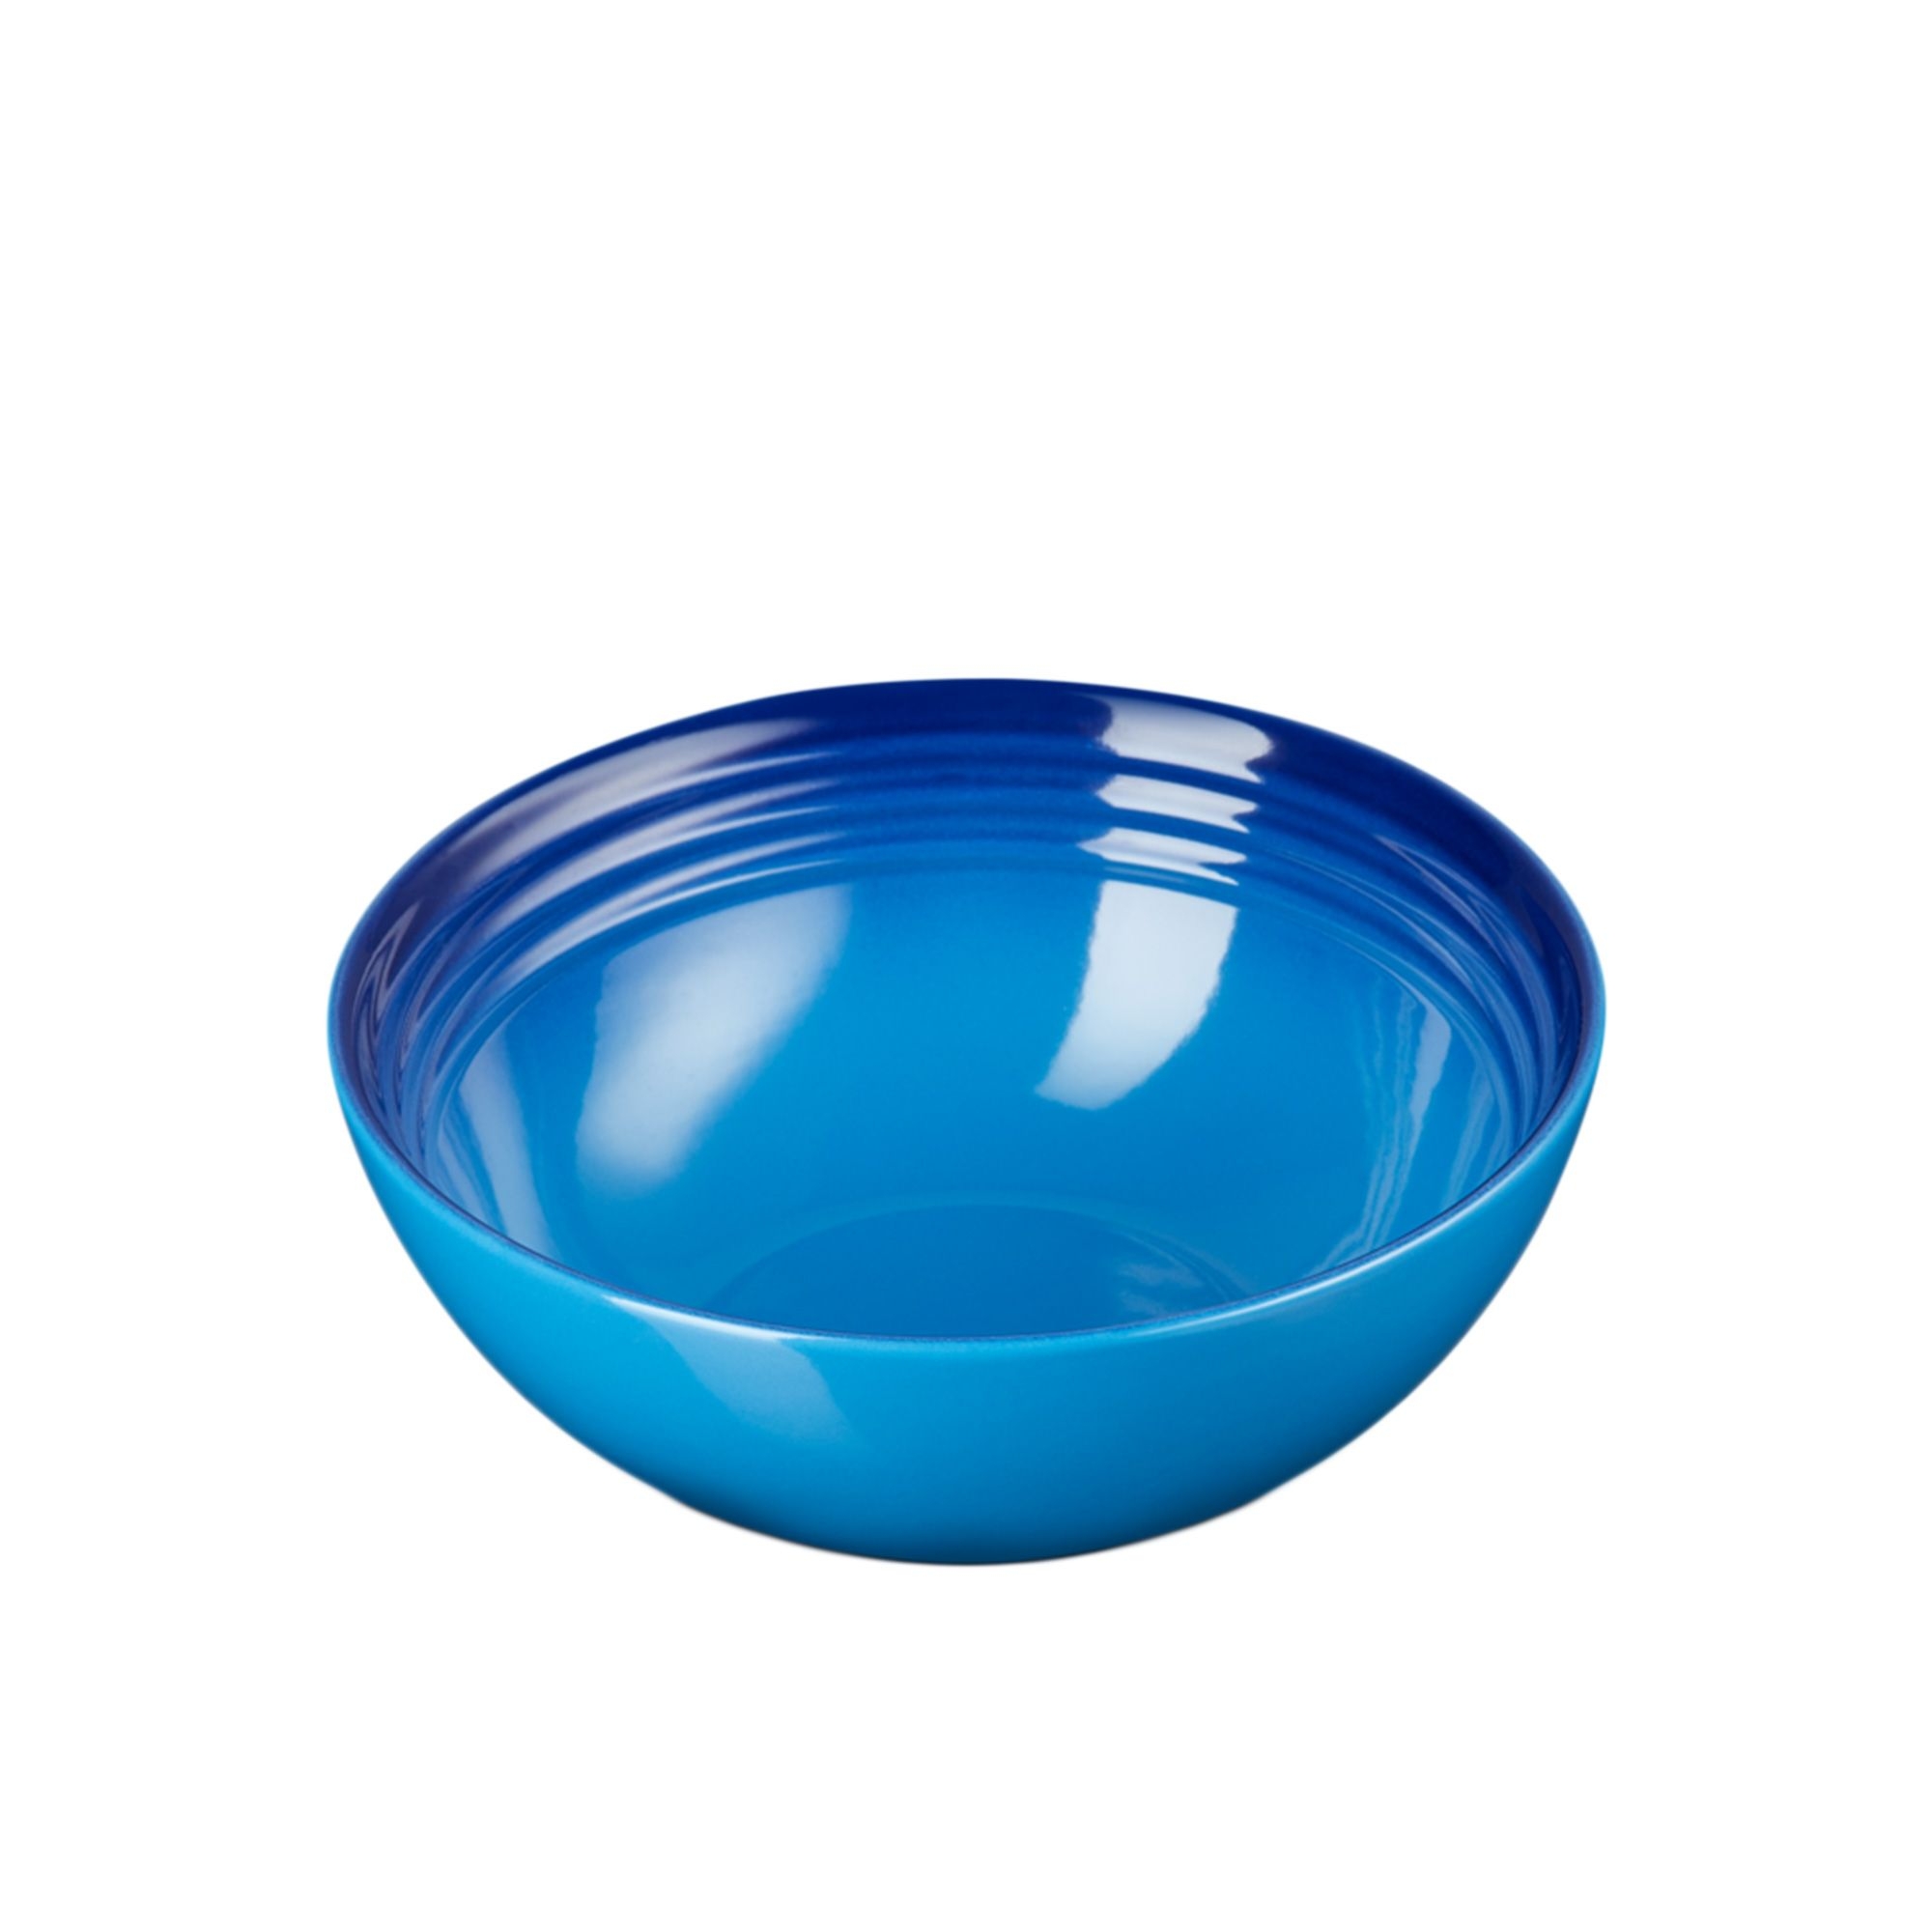 Le Creuset Stoneware Cereal Bowl Set of 4 Azure Blue Image 2